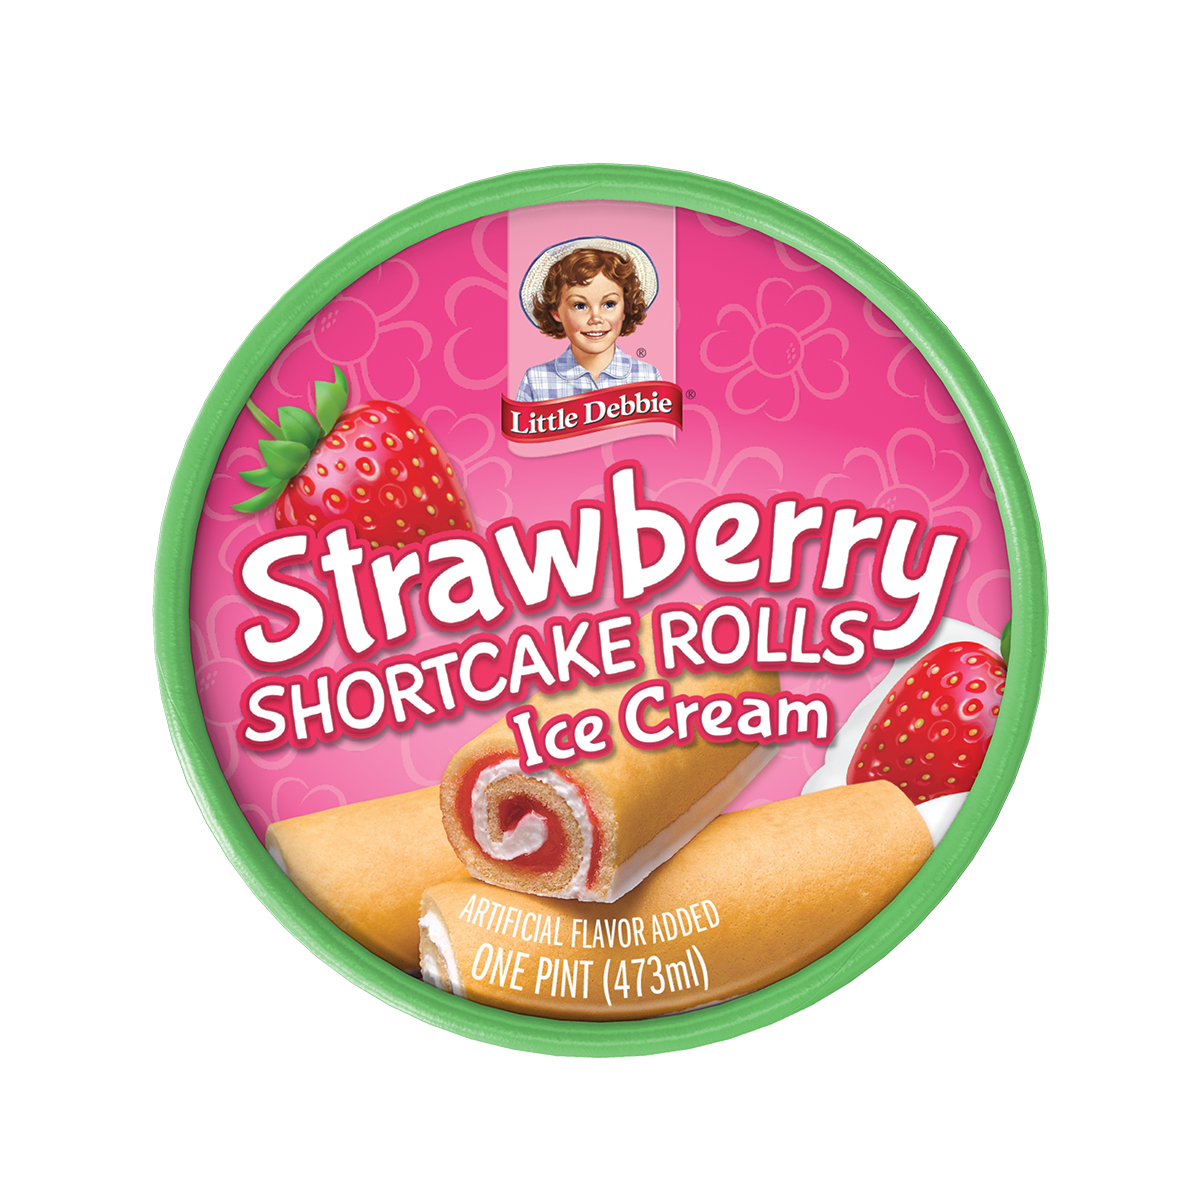 Little Debbie Strawberry Short Cake Ice Cream, White Cake with Strawberry Pint, 16 oz - image 3 of 6